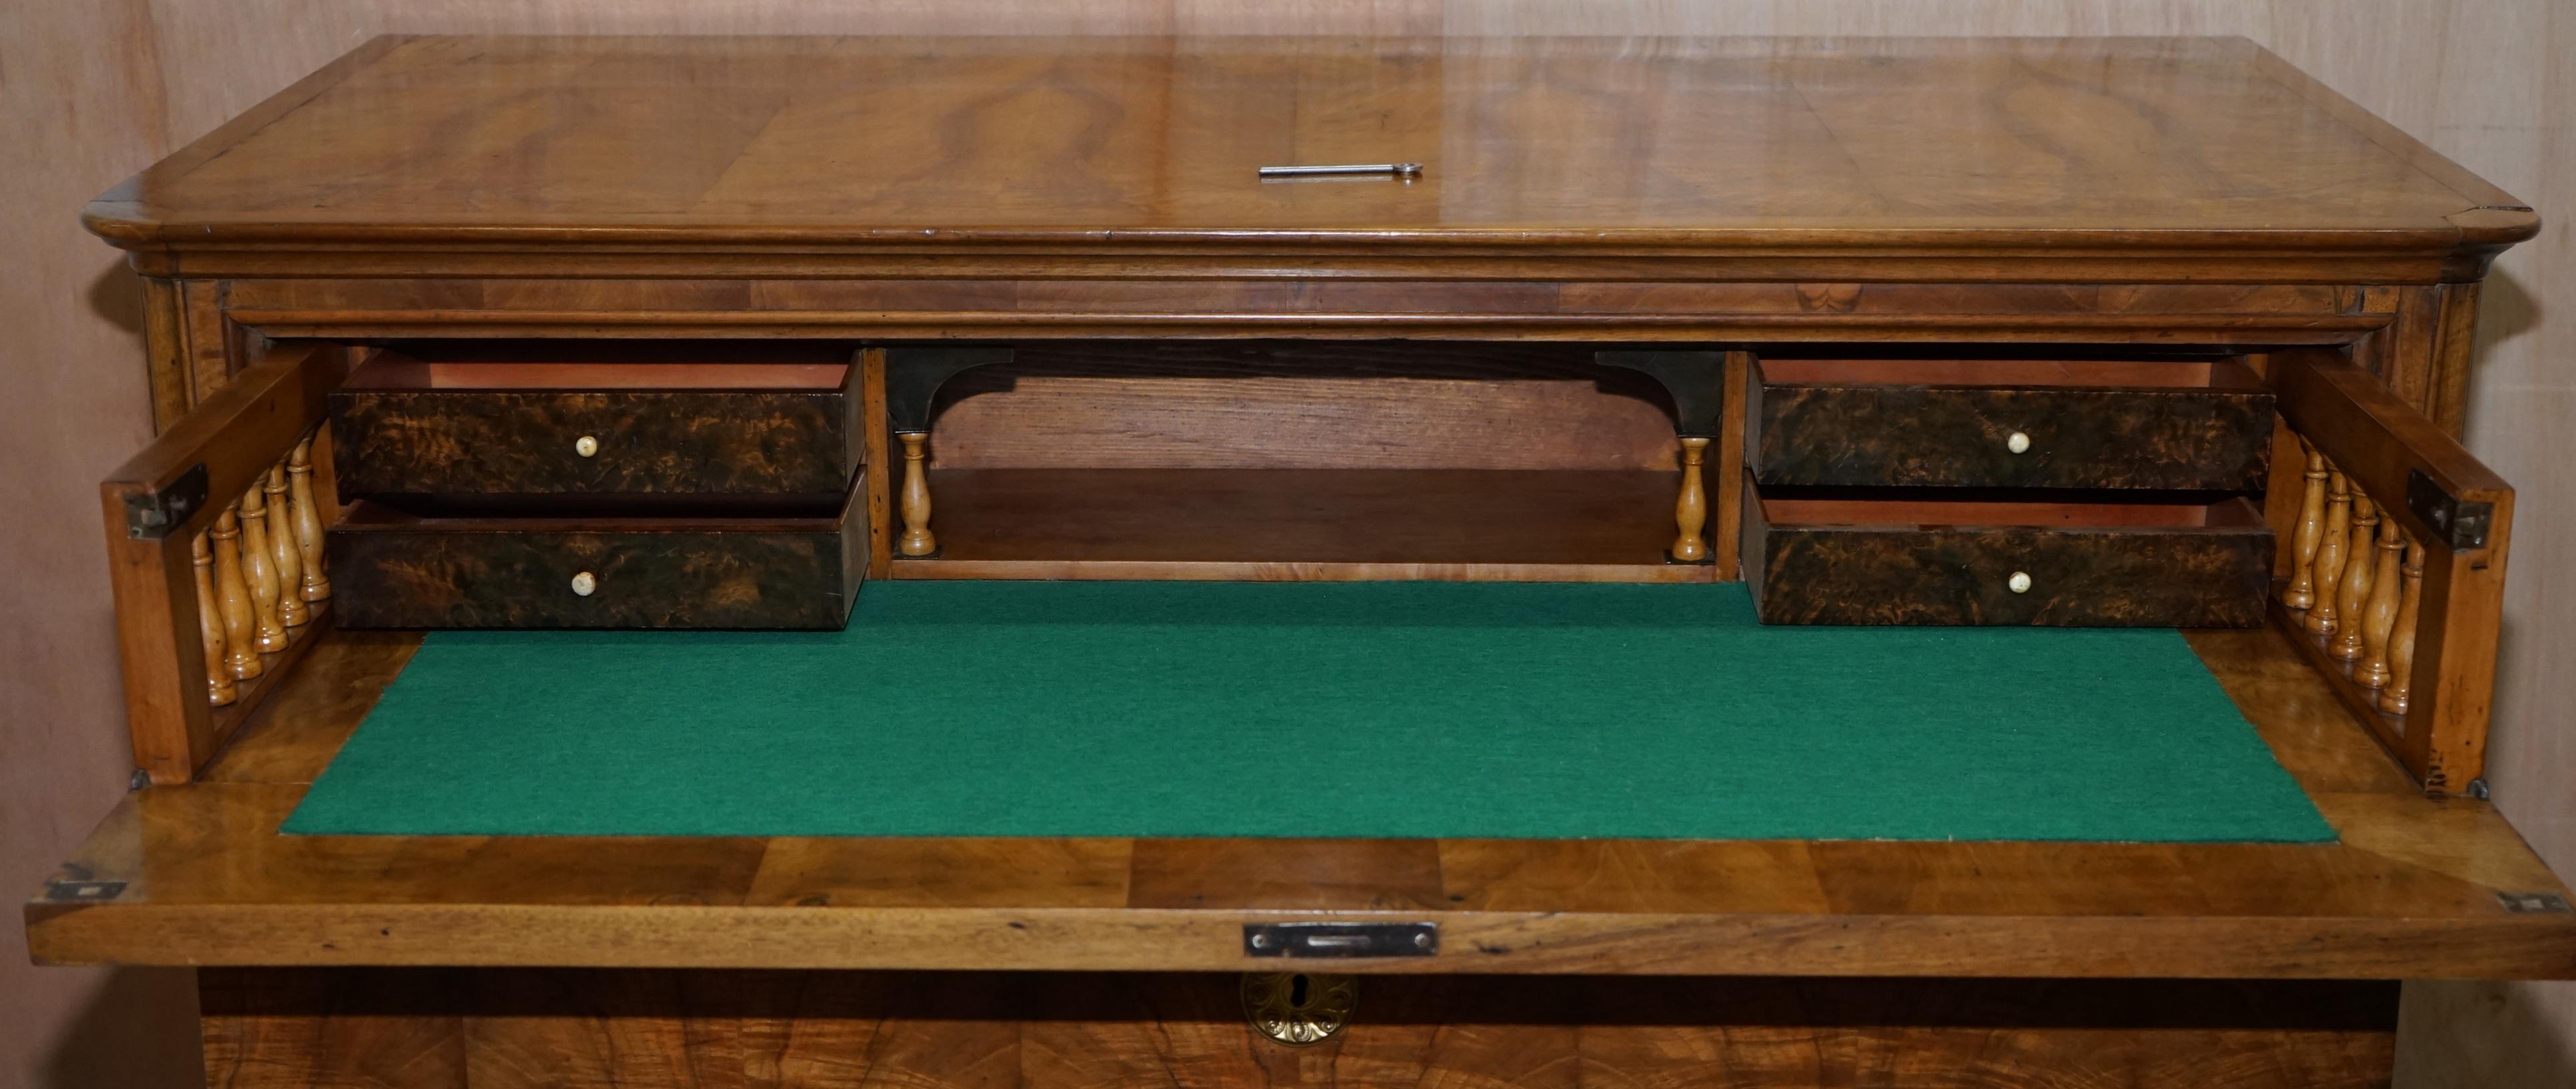 Huge 19th Century Walnut Biedermeier Chest of Drawers Drop Front Desk Secretaire 12